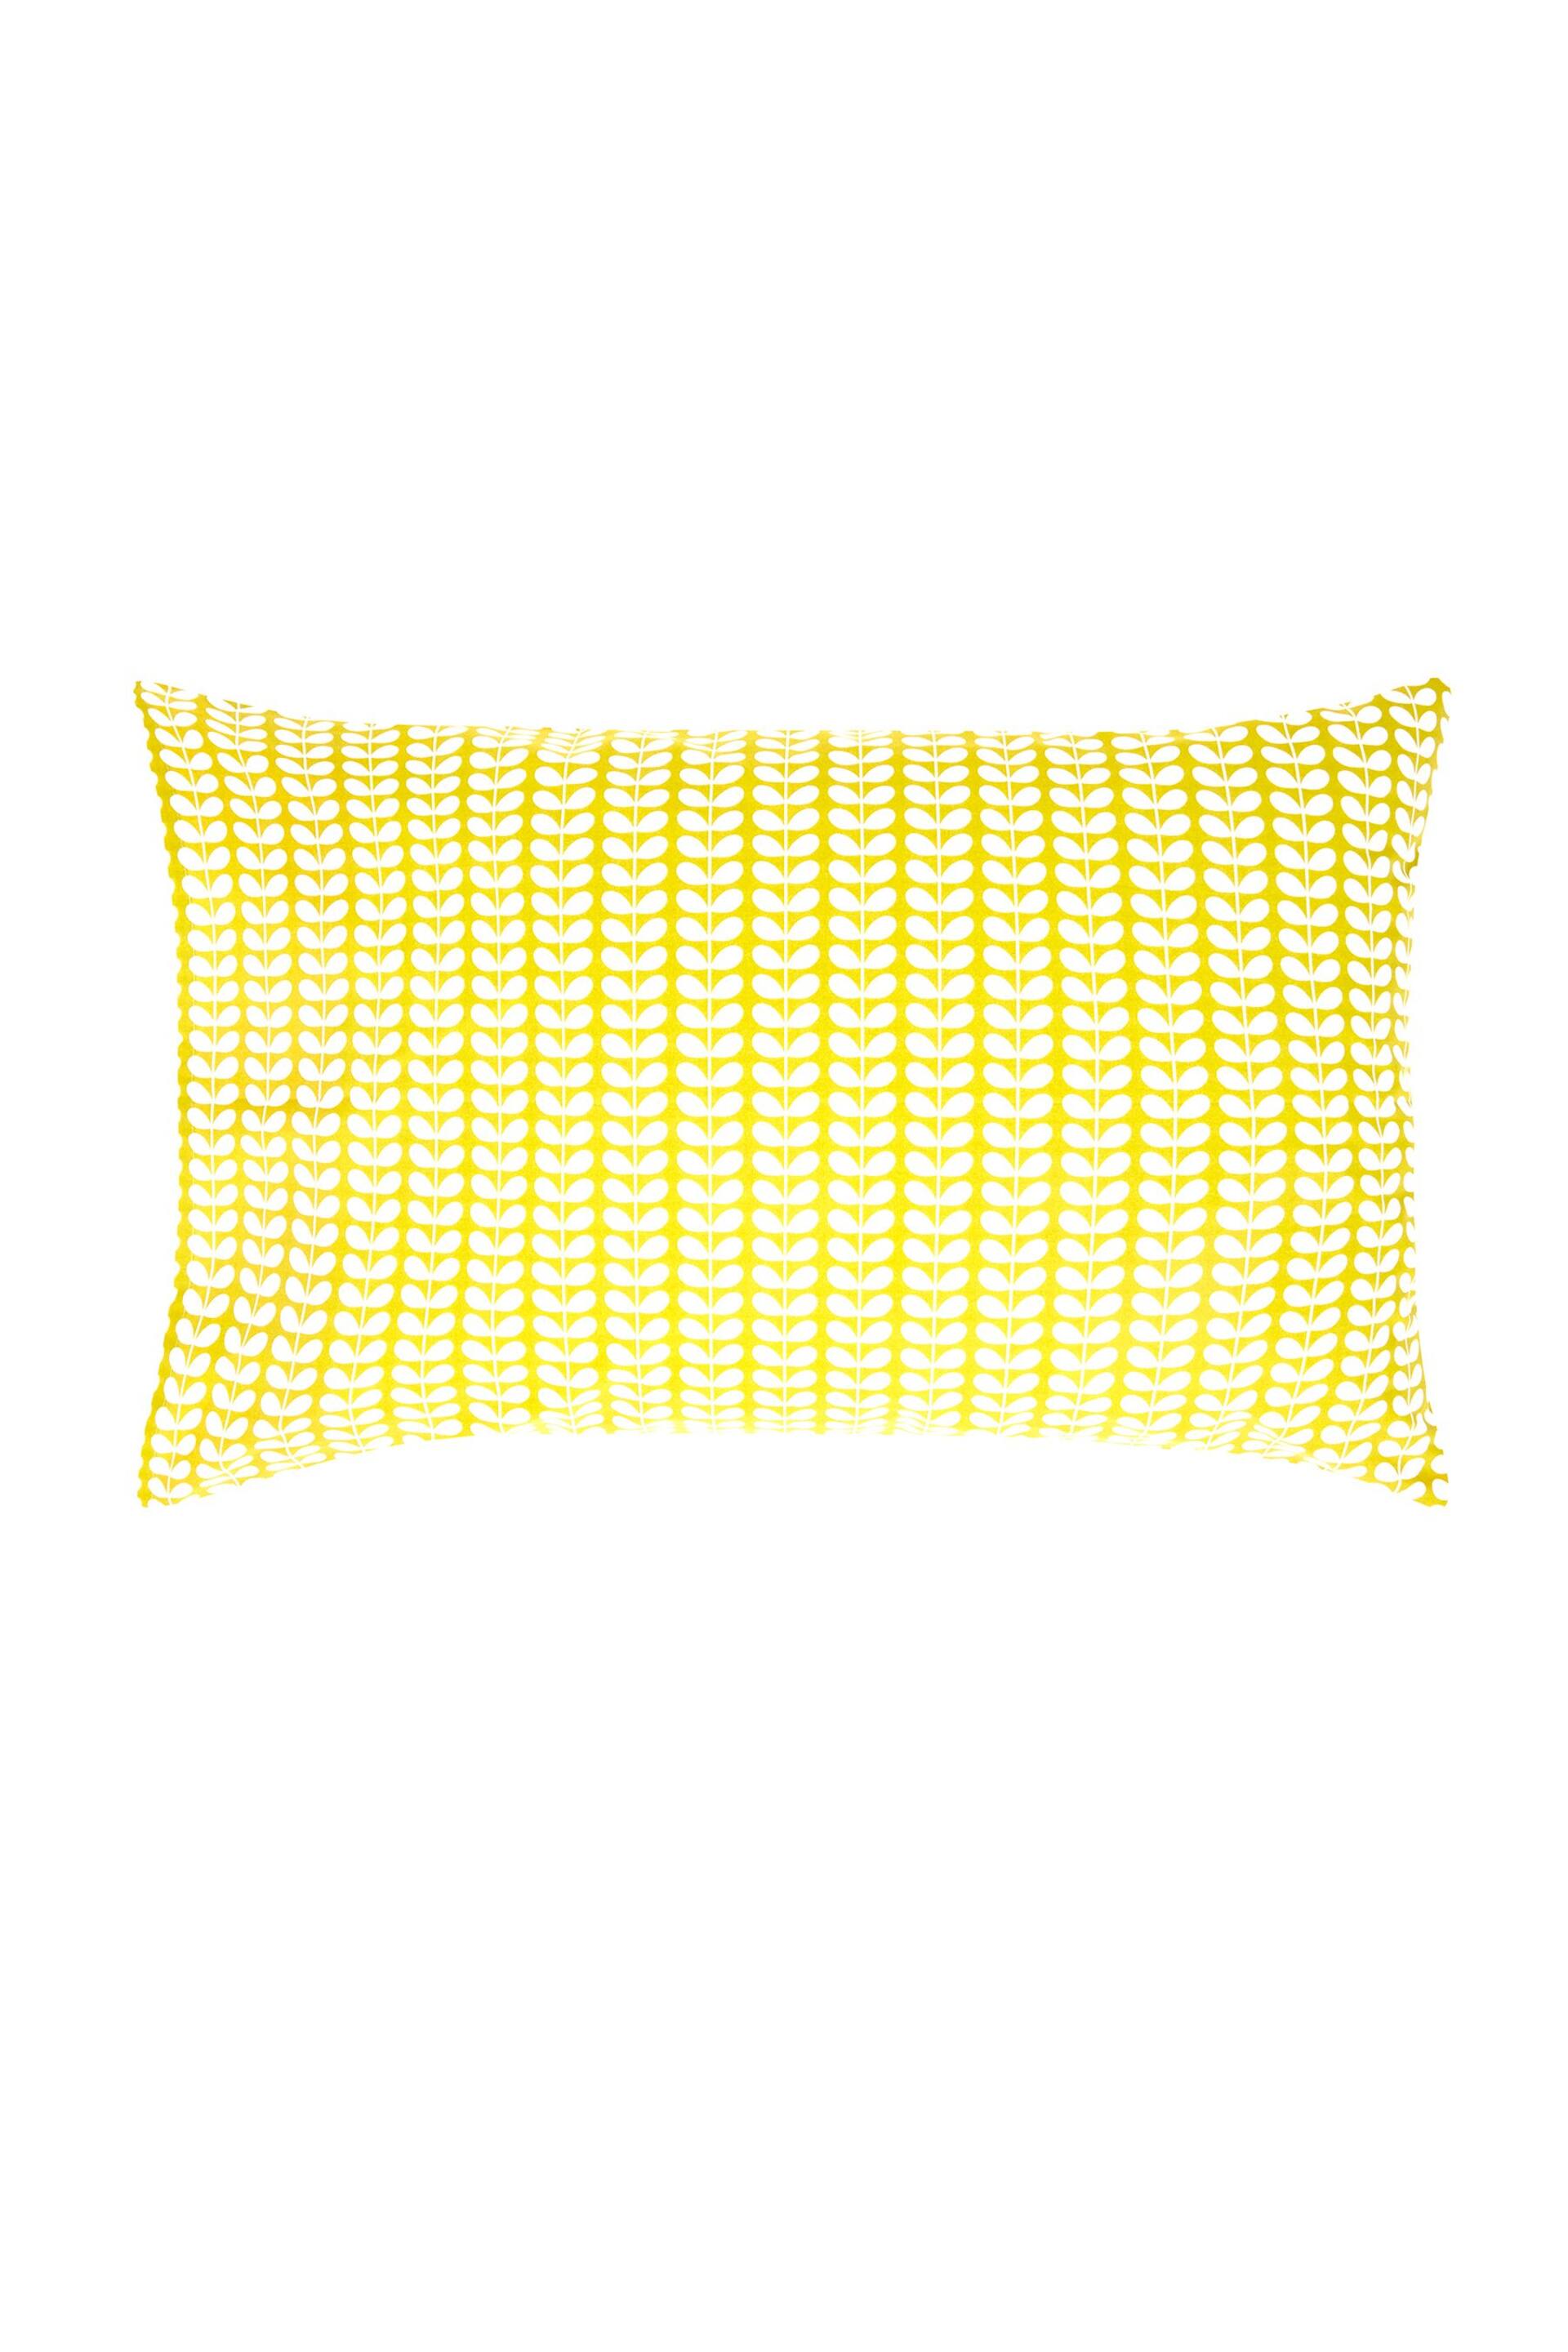 Orla Kiely Yellow Tiny Stem Duvet Cover and Pillowcase Set - Image 4 of 4